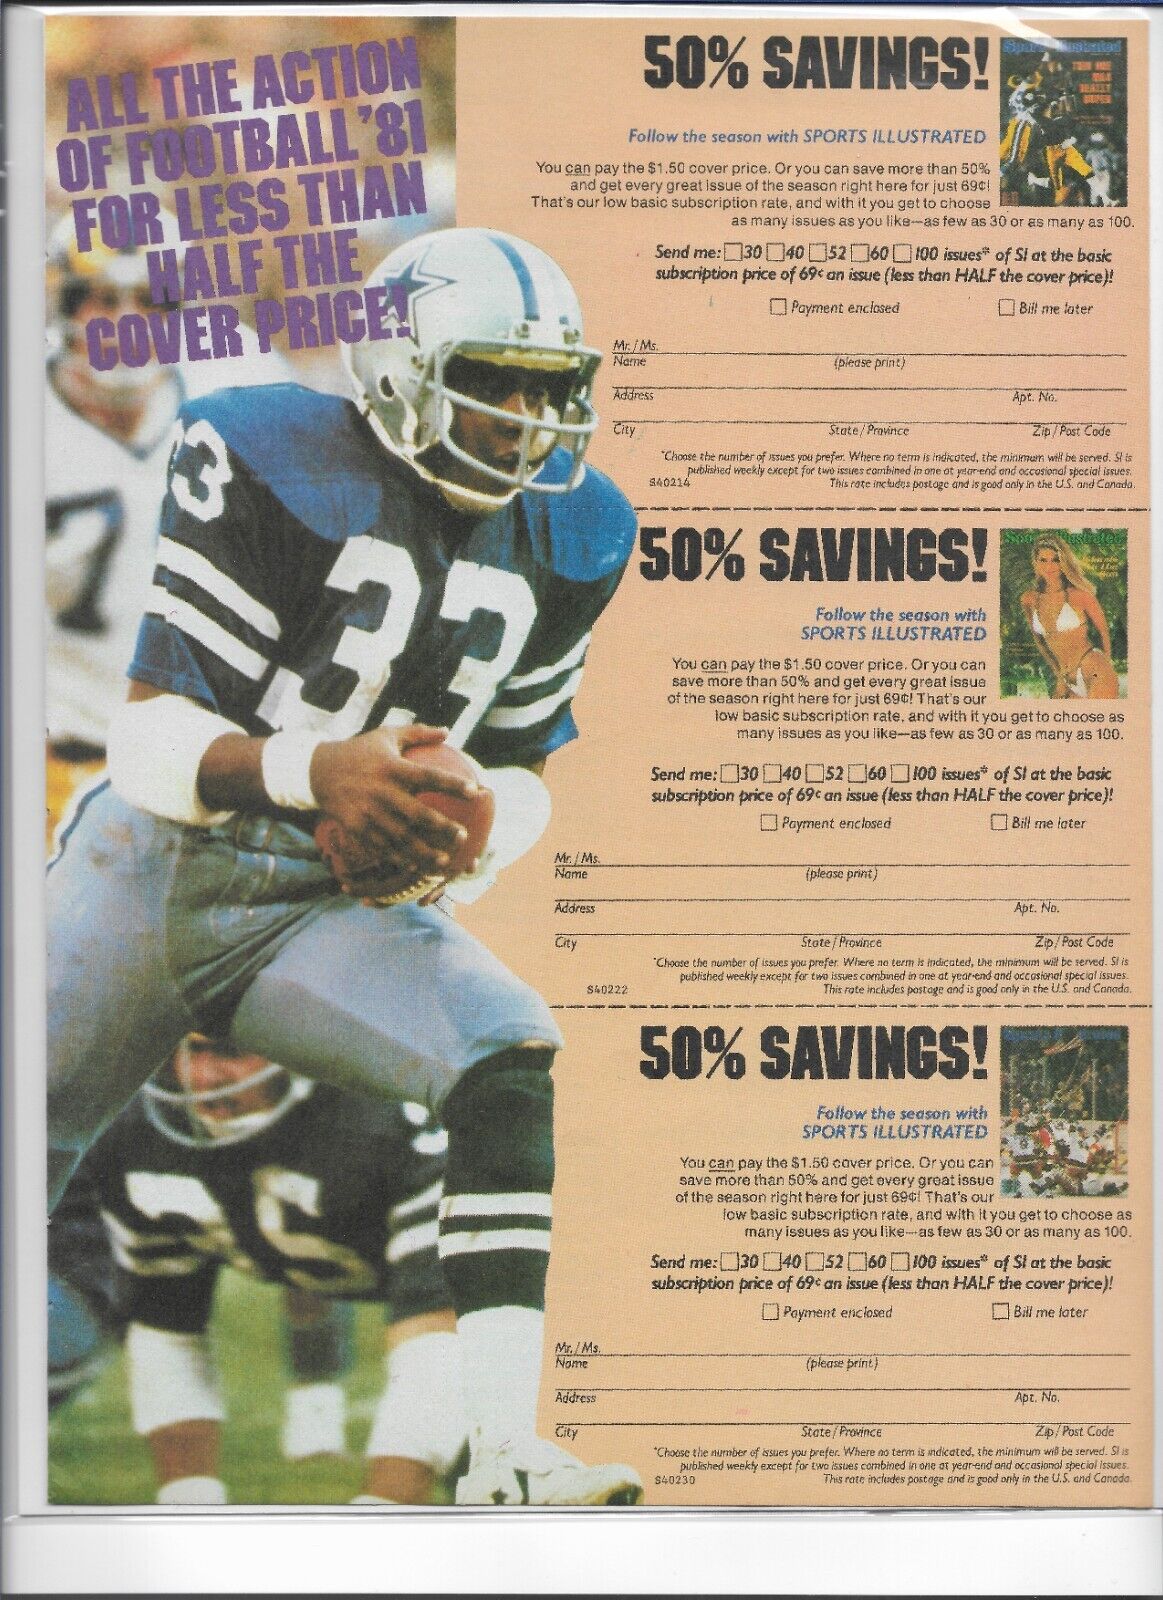 1981 Tony Dorsett Sports Illustrated Subscription Inserts Magazine Ad - 8x11